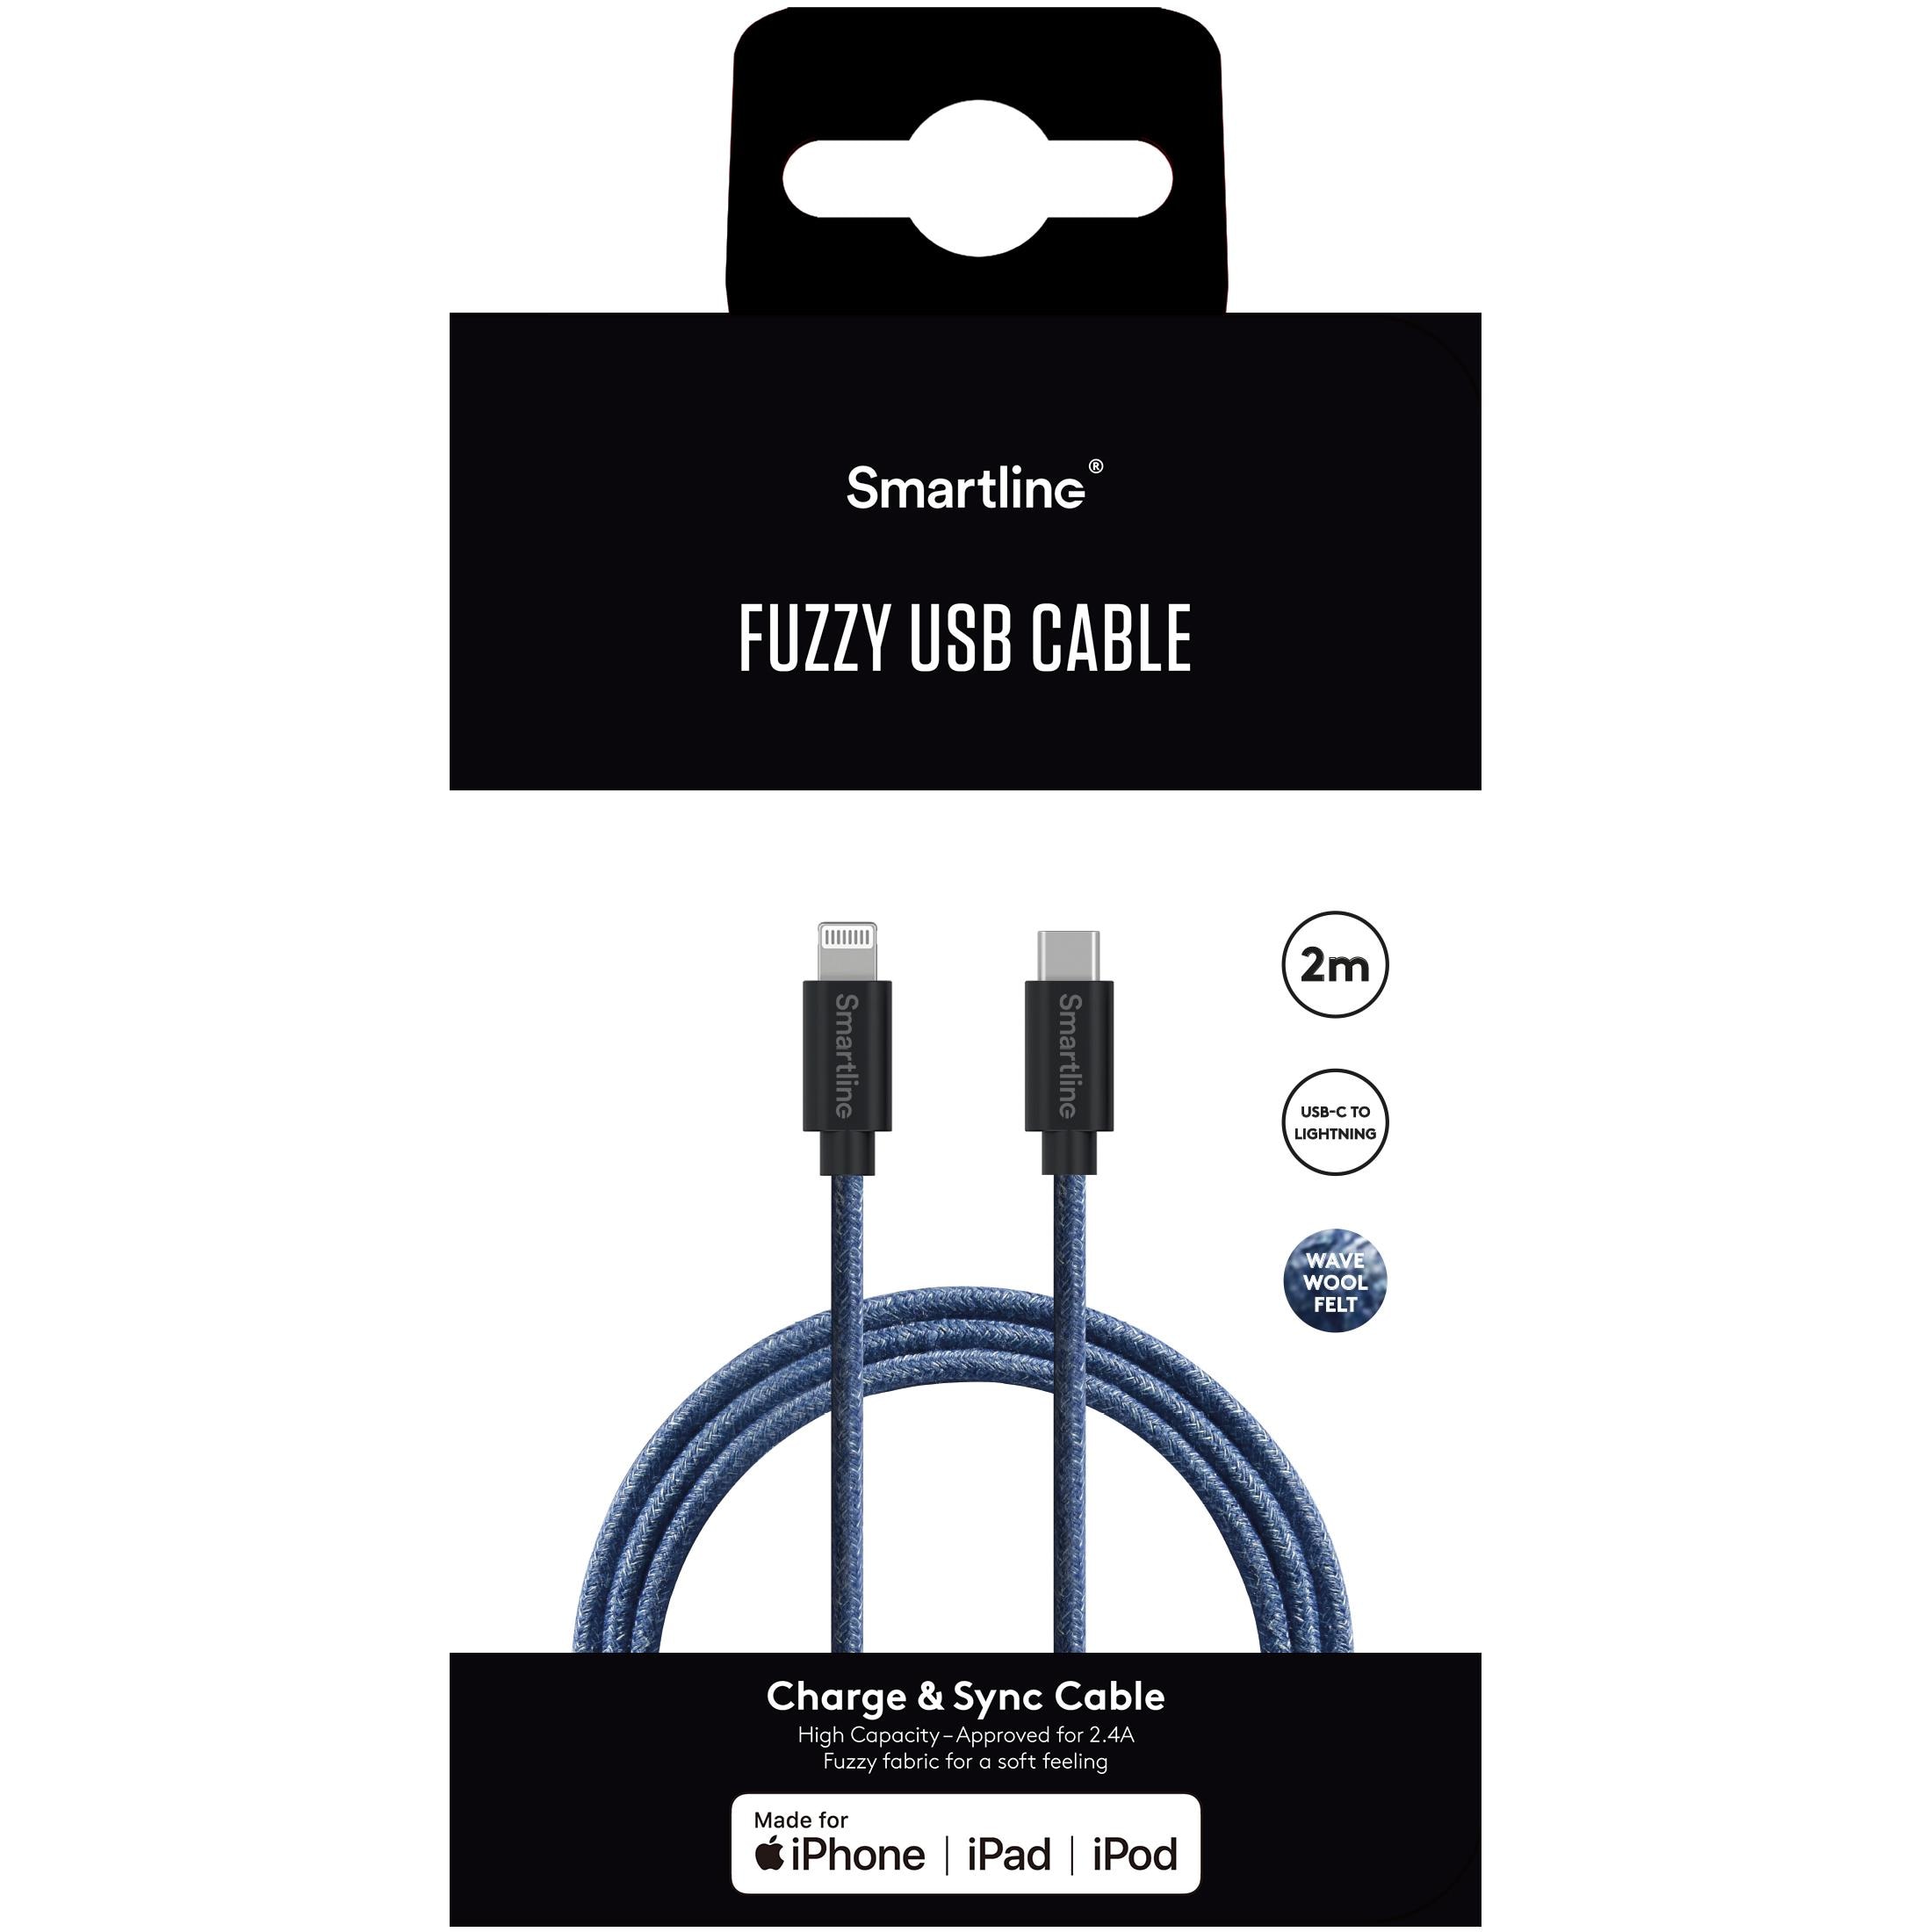 Fuzzy USB Cable USB-C -> Lightning 2m Wave